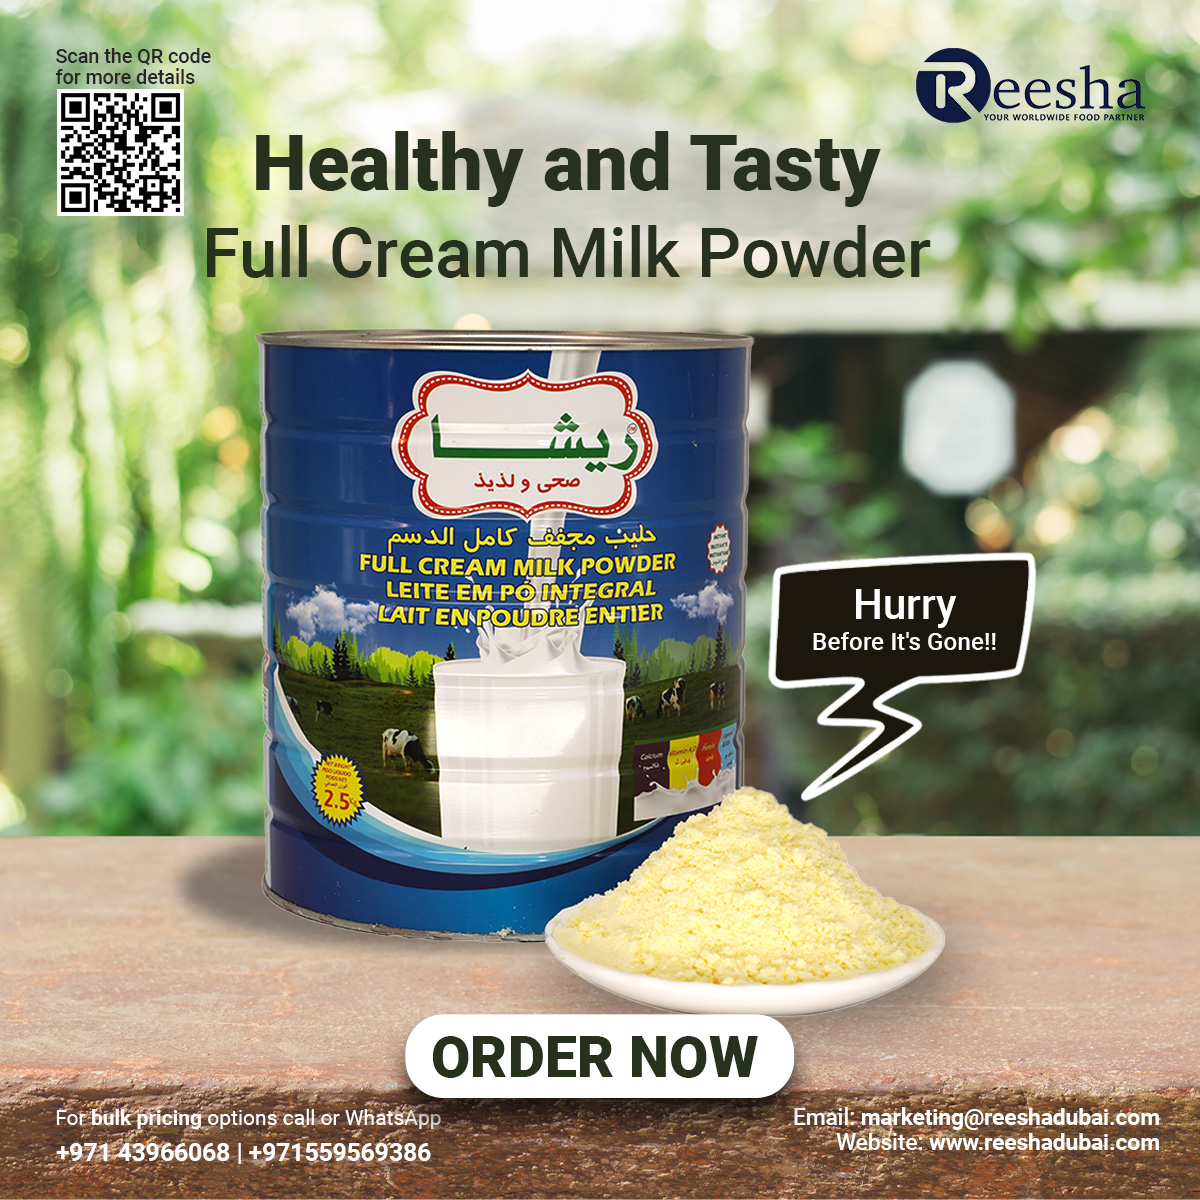 Premium Quality Full Cream Milk Powder from Poland – Ready Stock